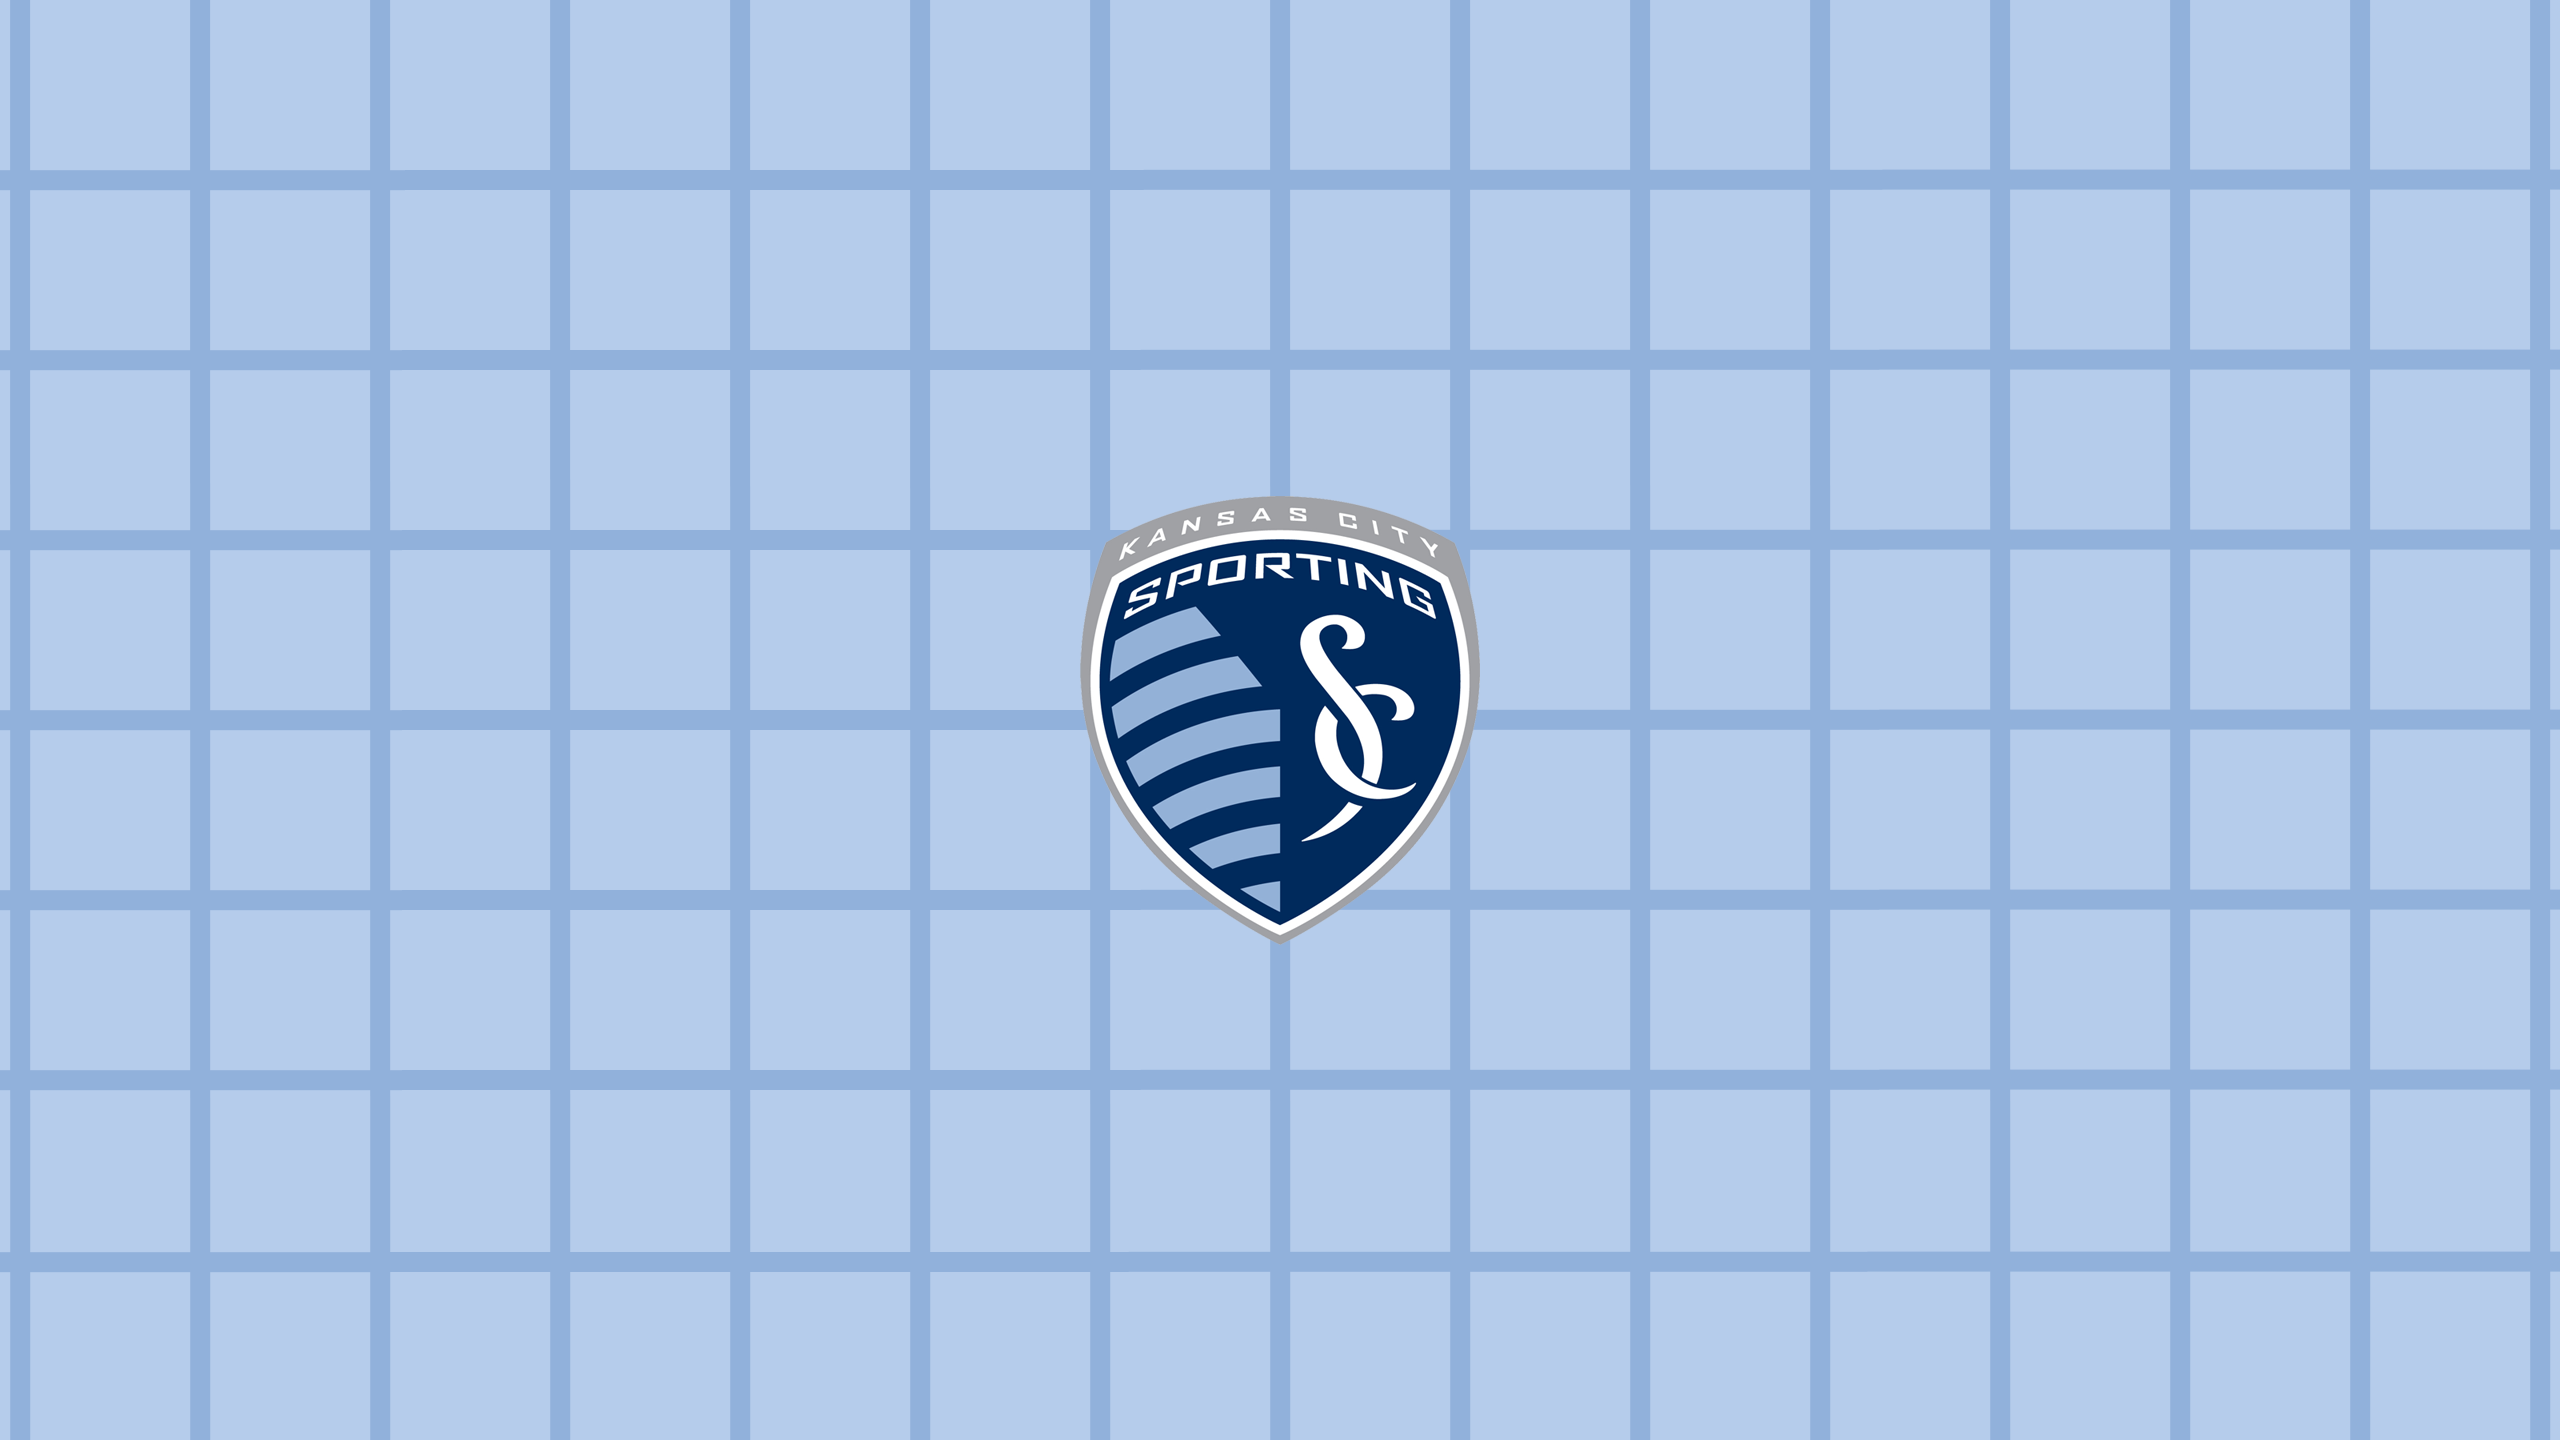 MLS Sporting KC Logo Team wallpaper HD. Free desktop background